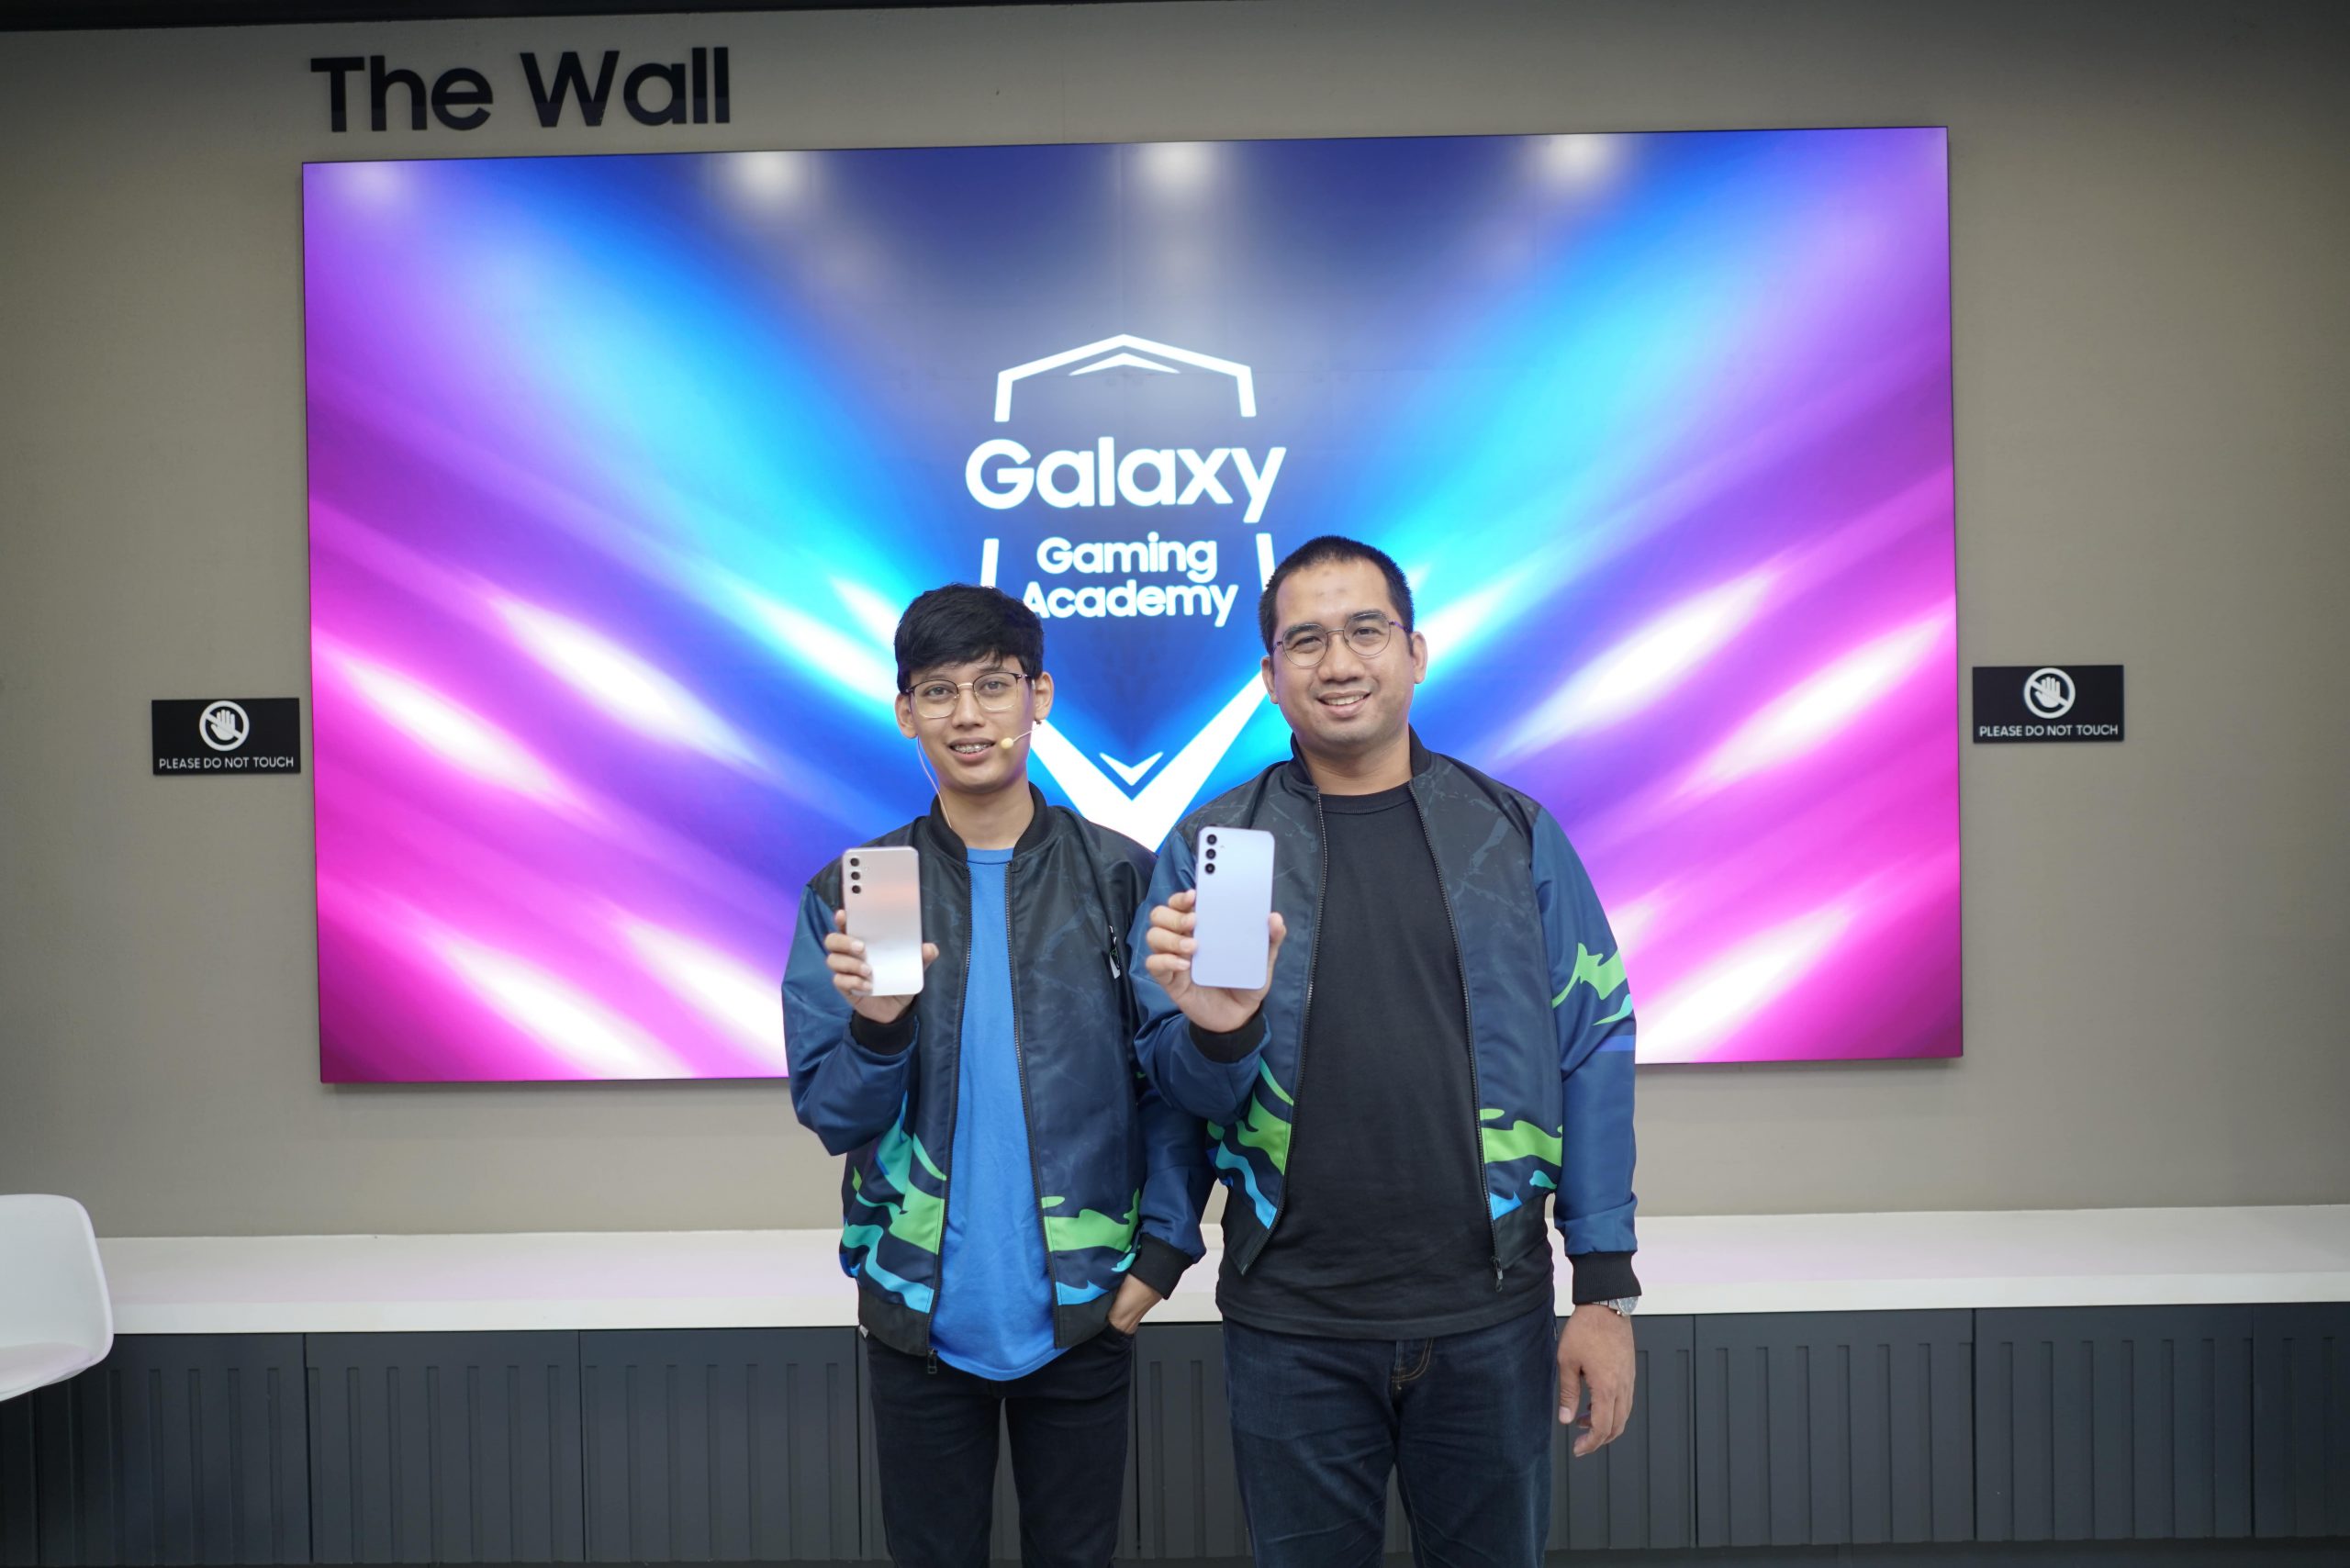 Foto 1 Taufiq Furqan MX Product Marketing Manager Samsung Electronics Indonesia dan Bangduk Galaxy Coach scaled